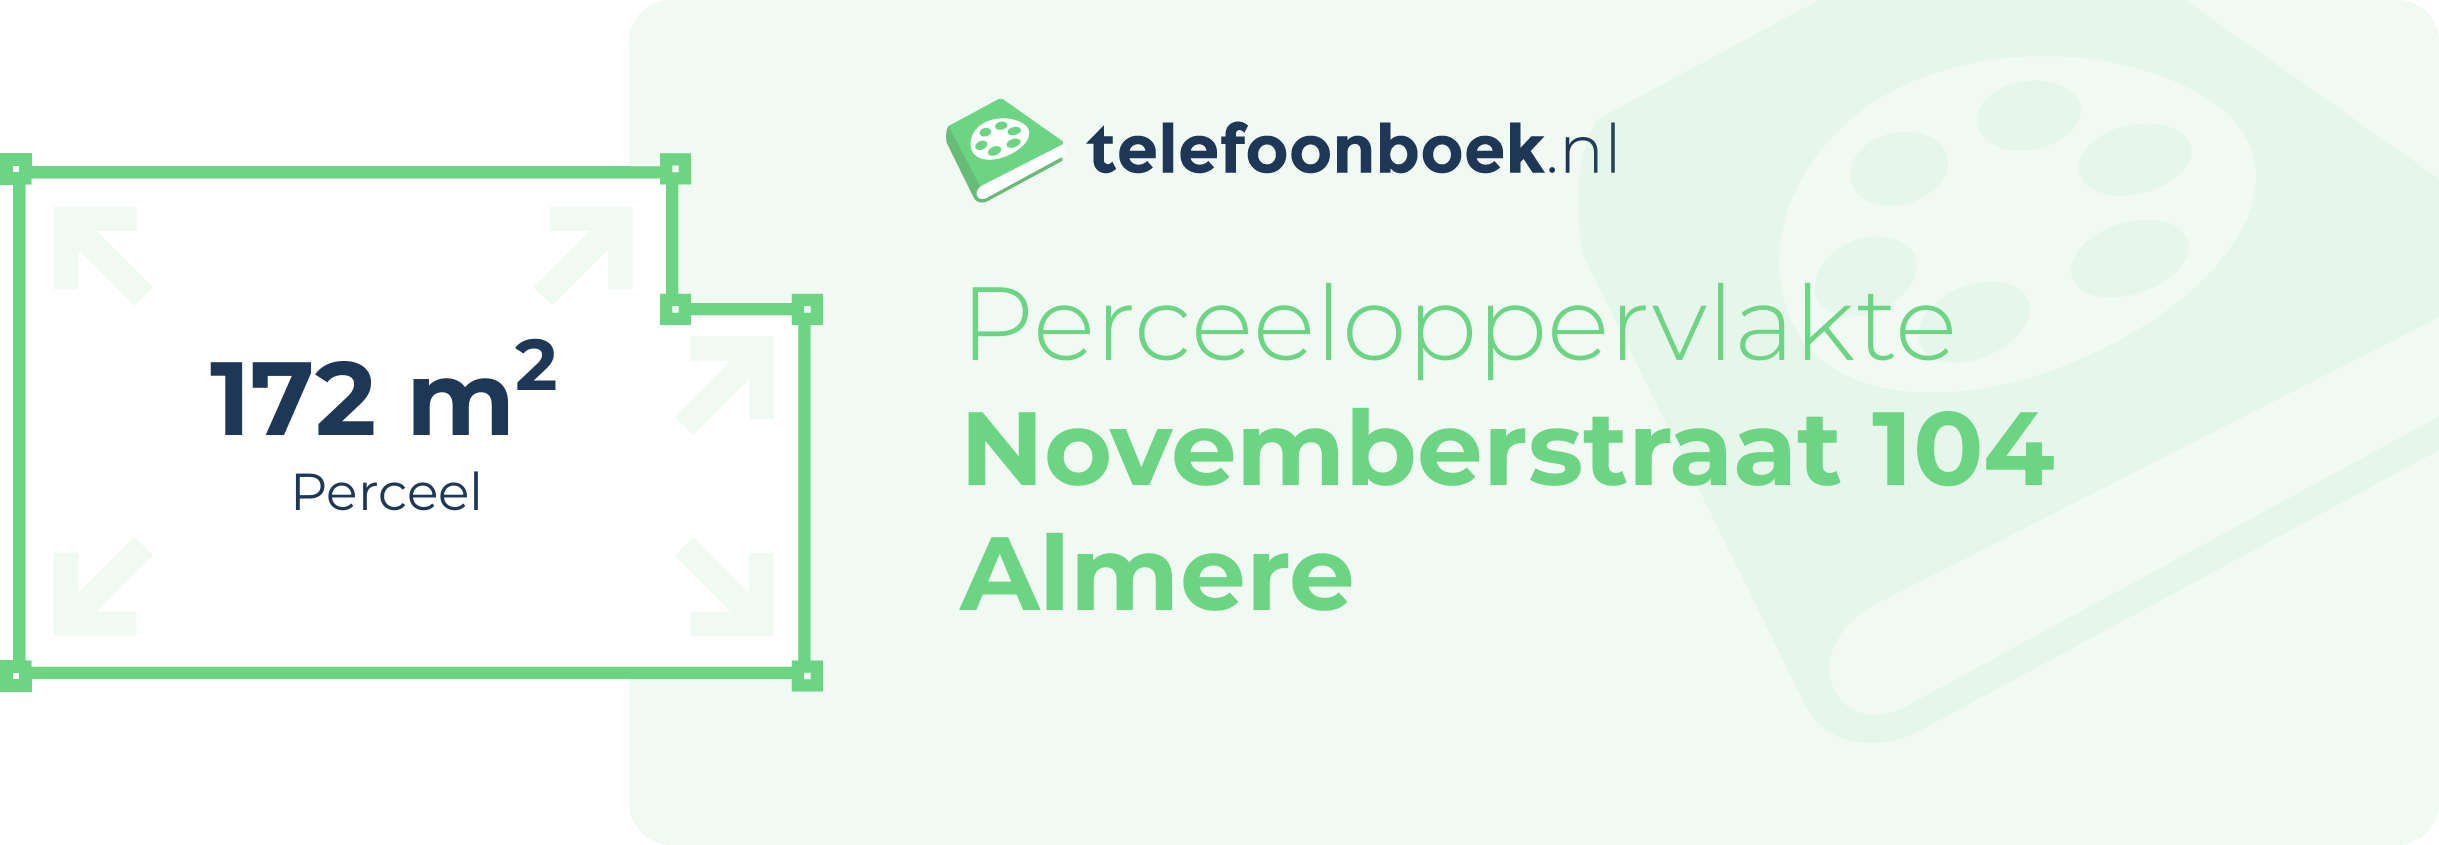 Perceeloppervlakte Novemberstraat 104 Almere